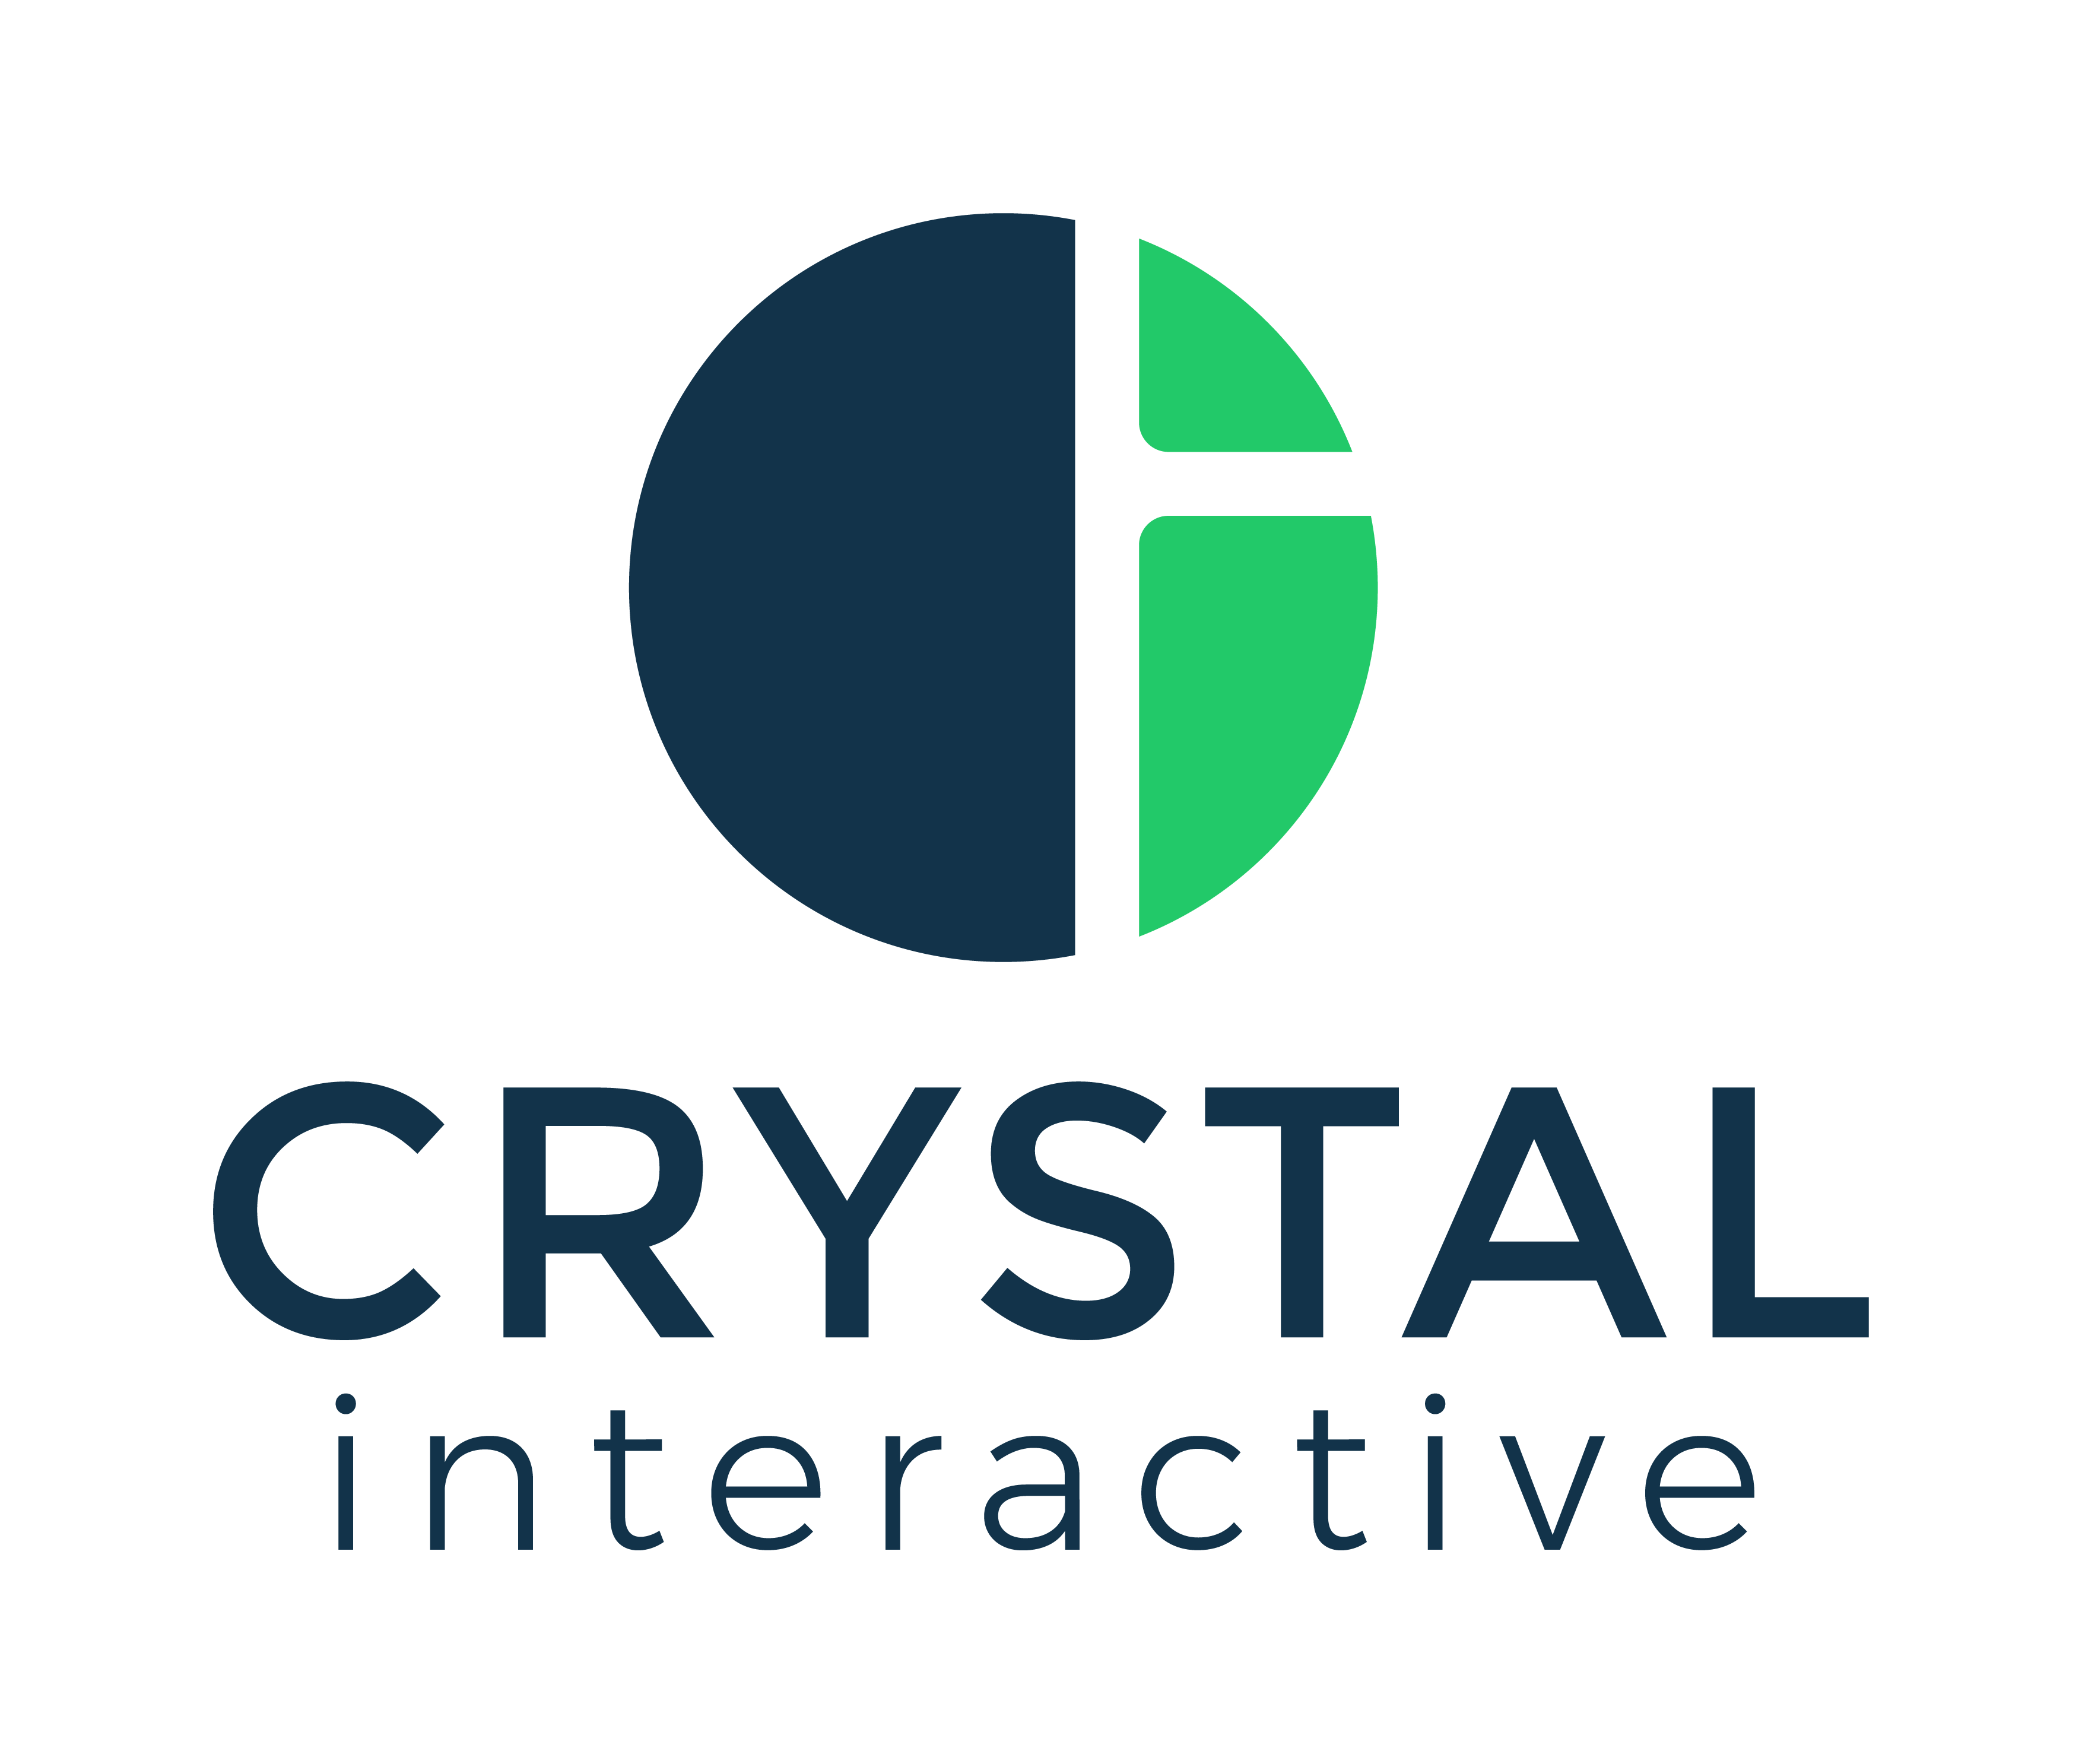 Crystal interactive logo